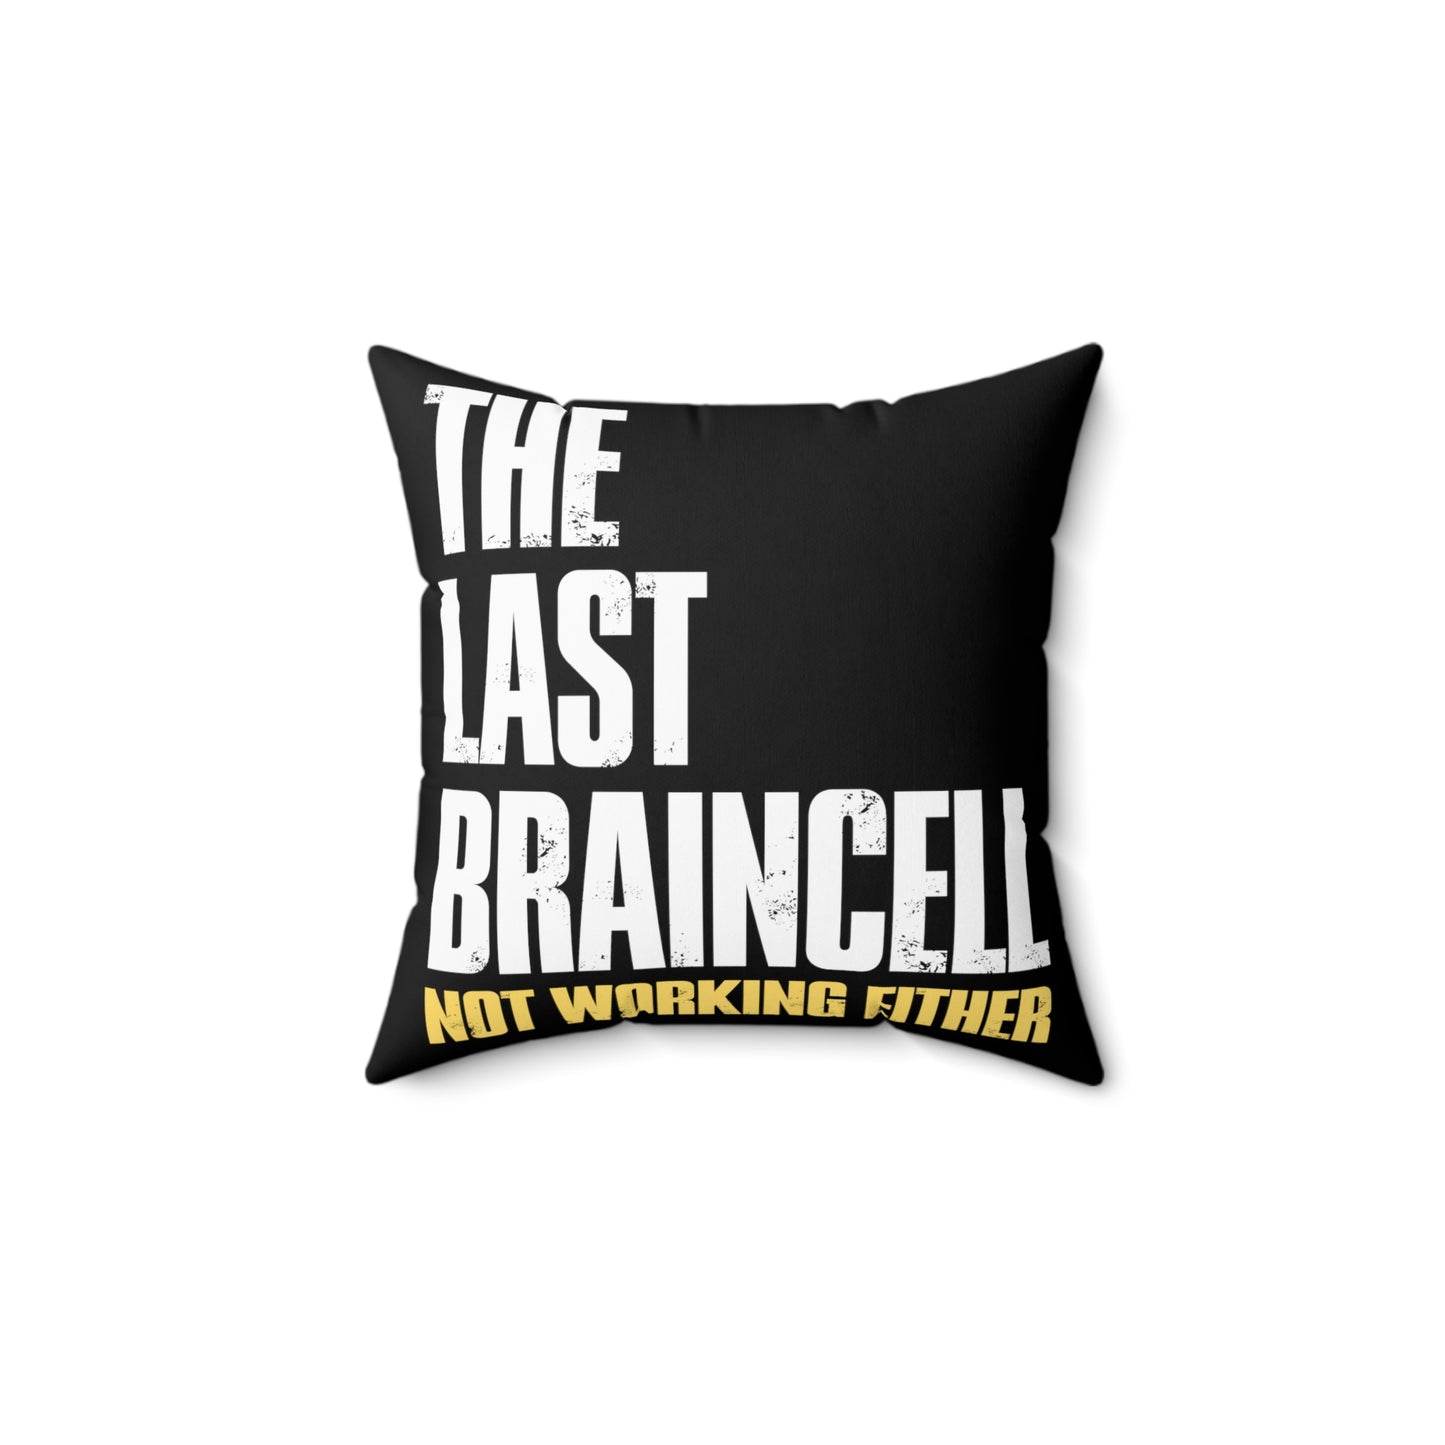 TLOU Pillow - The Last Braincell